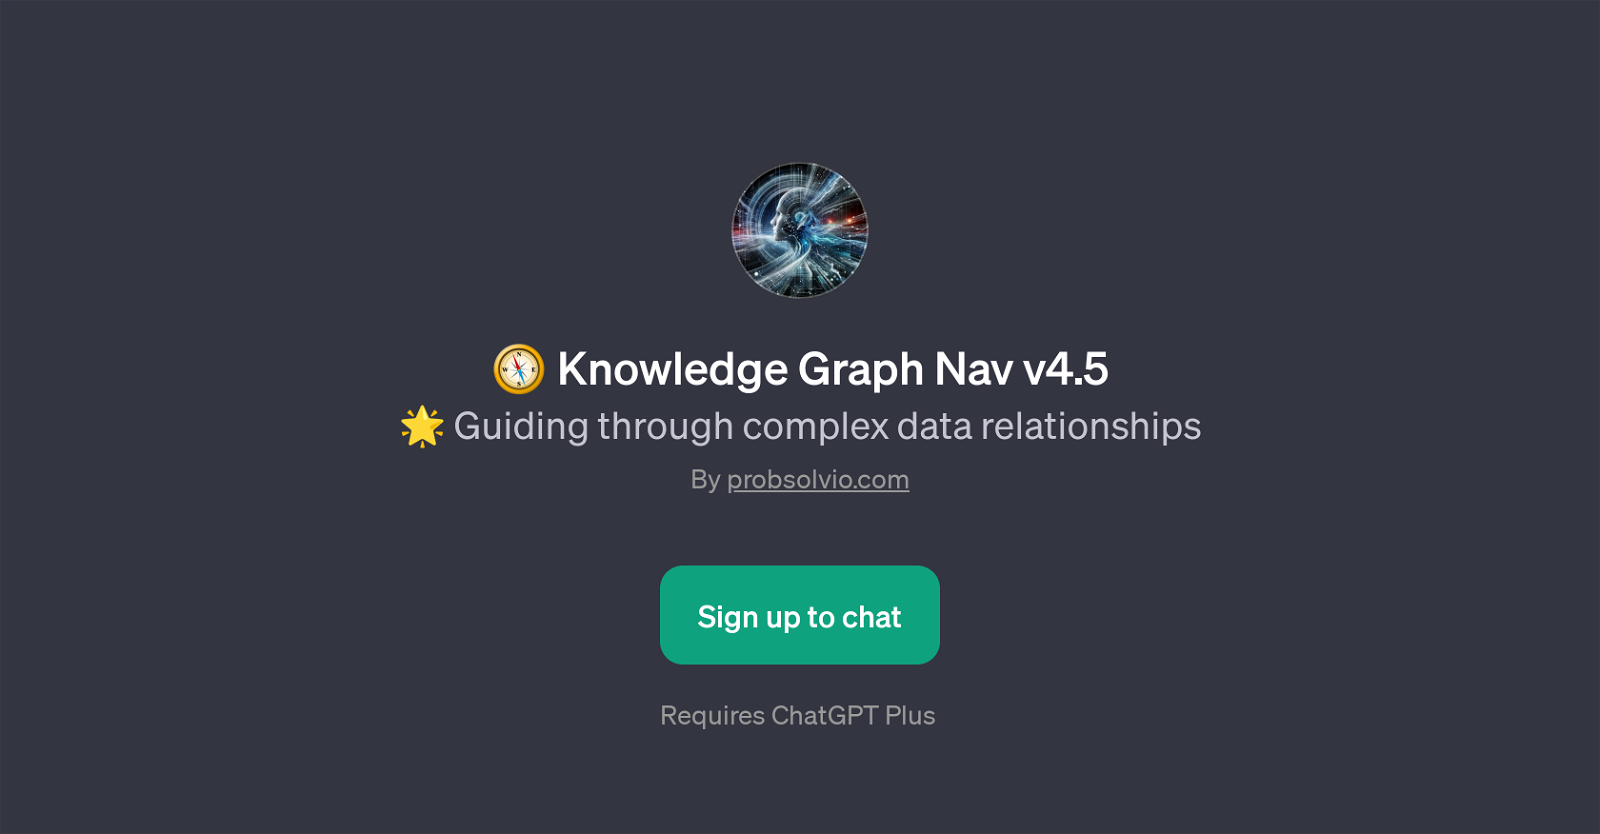 Knowledge Graph Nav v4.5 website